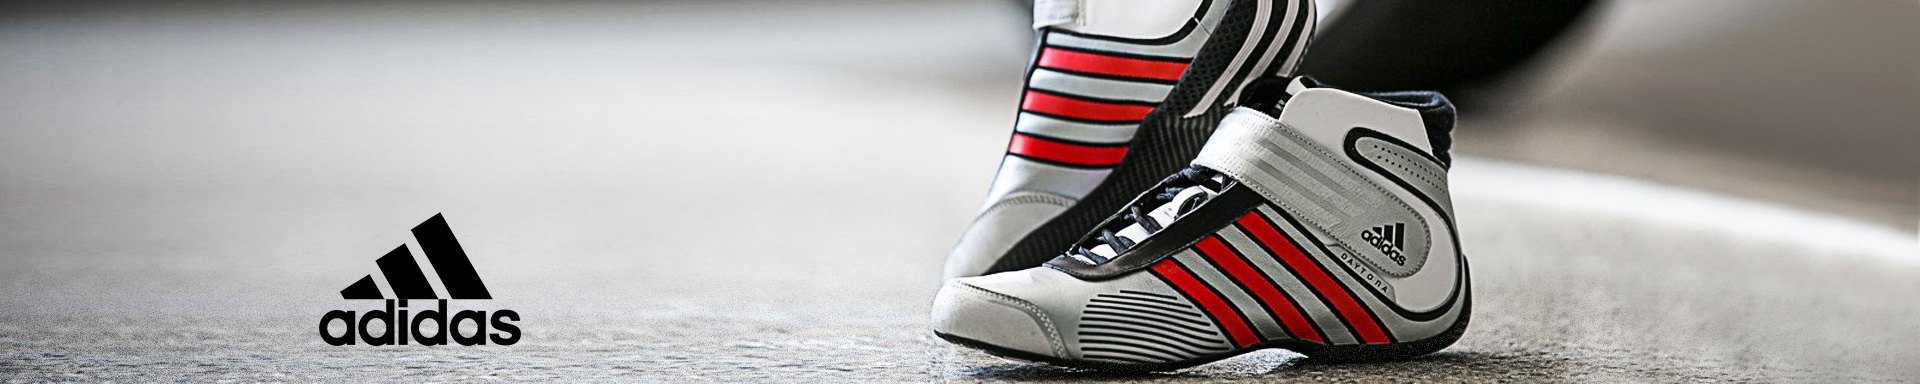 adidas motorsport shoes